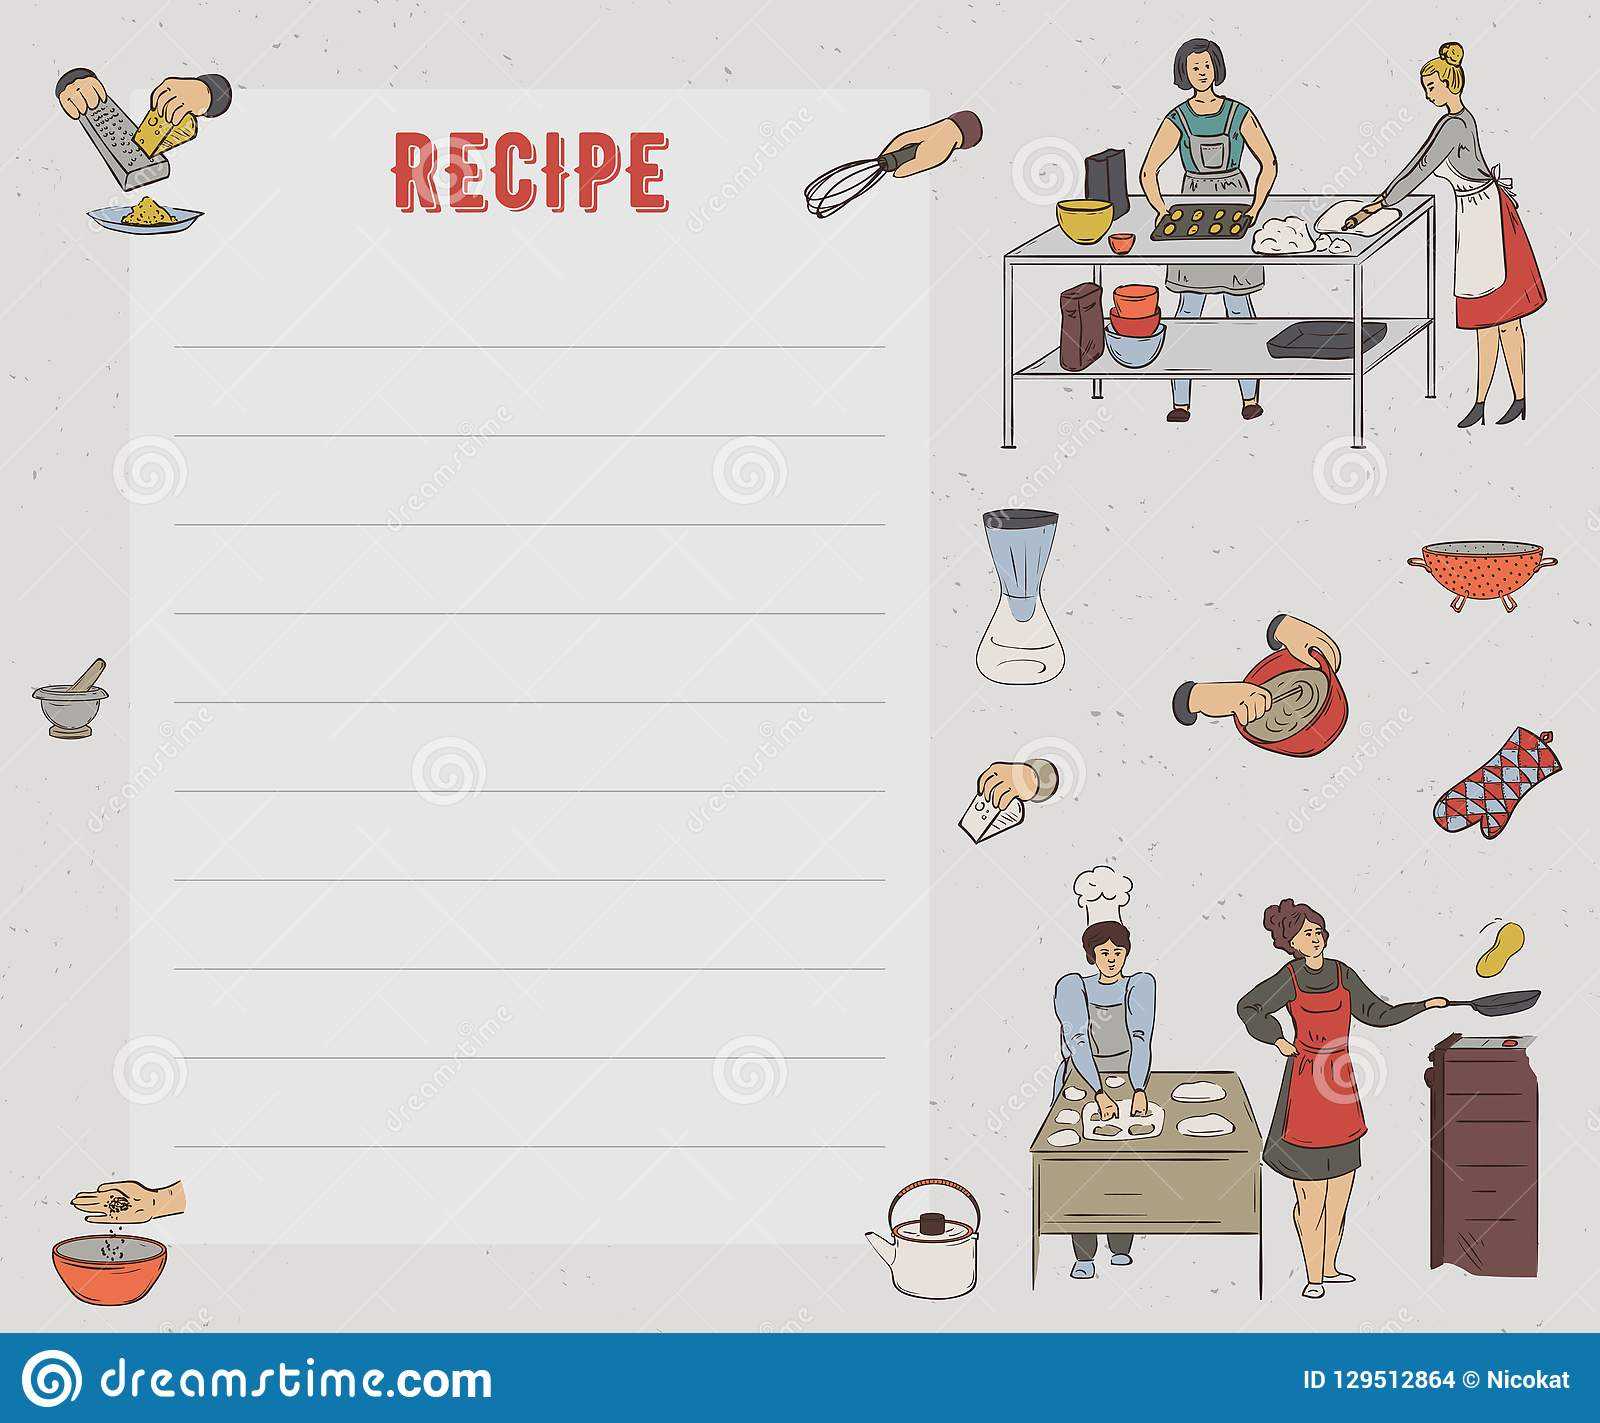 Recipe Card. Cookbook Page. Design Template With People In Recipe Card Design Template